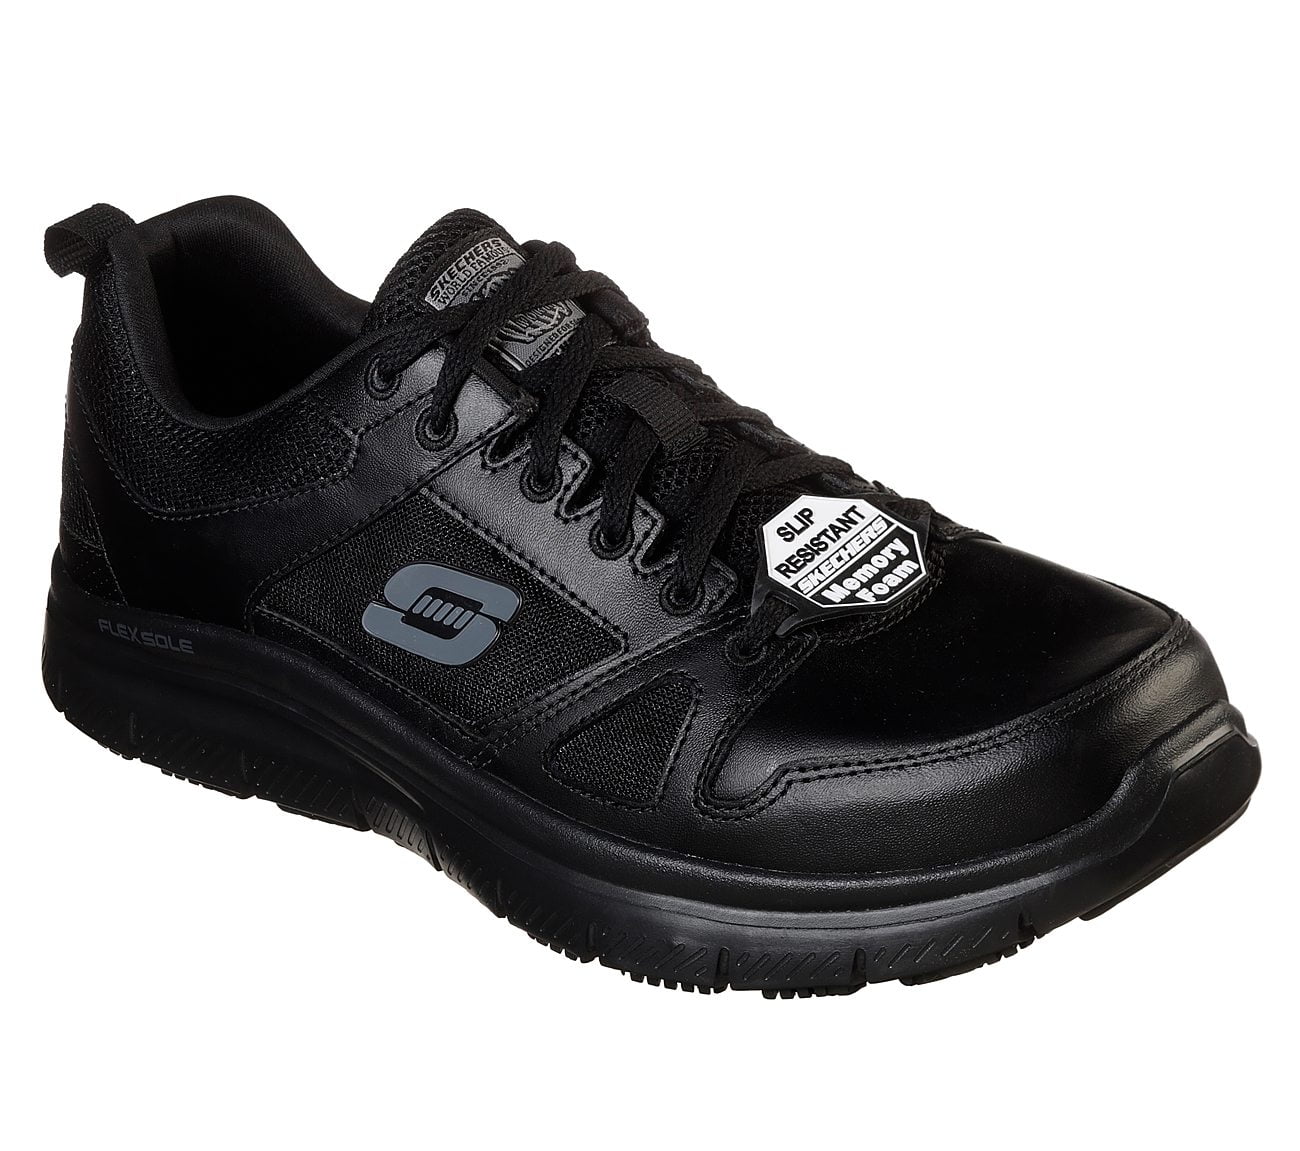 cálmese historia brillo Skechers Men's Flex Advantage SR Work Shoe, Black/Black, 8 W US -  Walmart.com